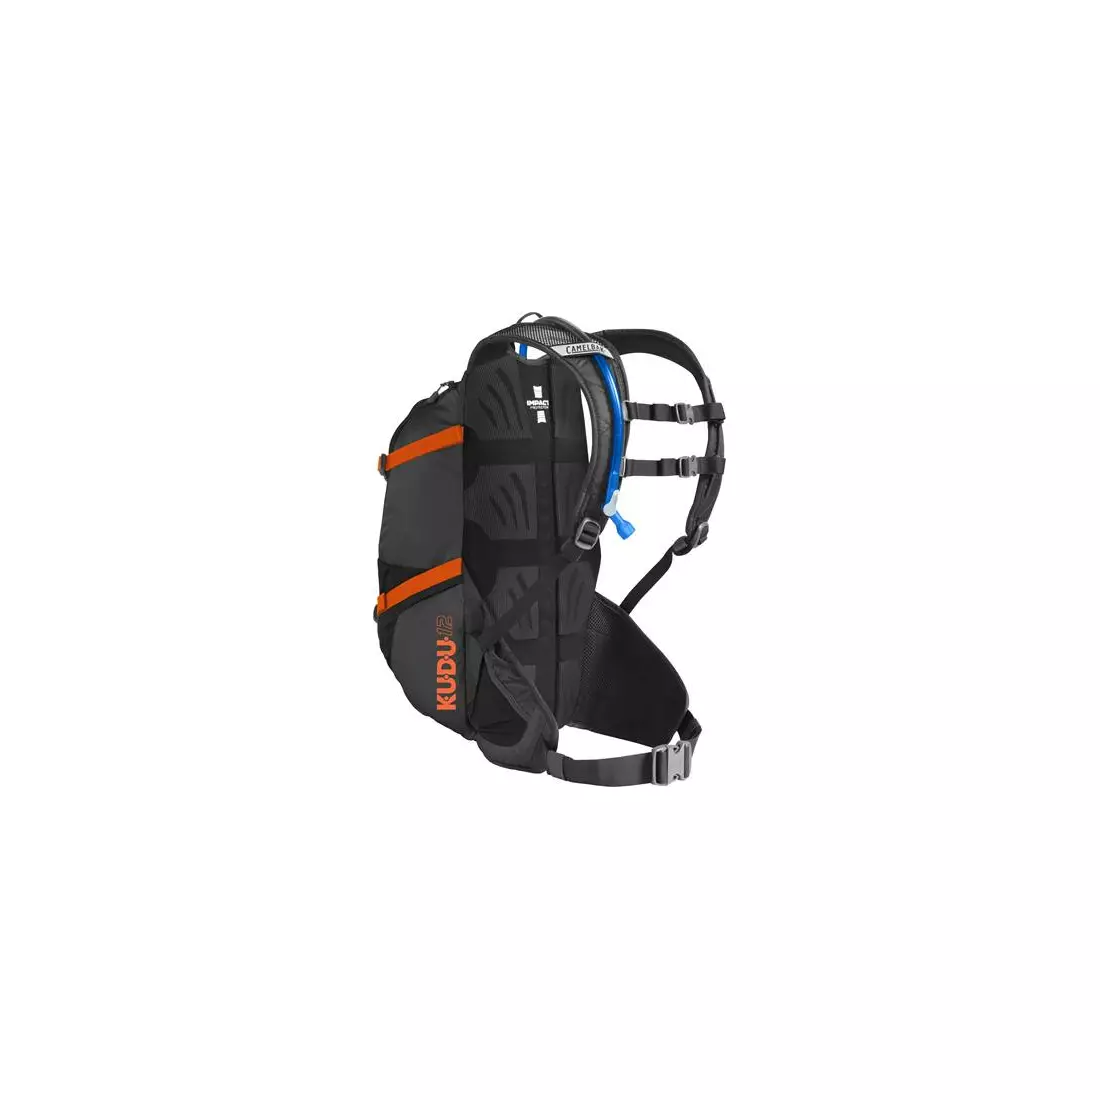 Camelbak SS18 bicycle backpack KUDU 18 DRY Black/Laser Orange 1357001900